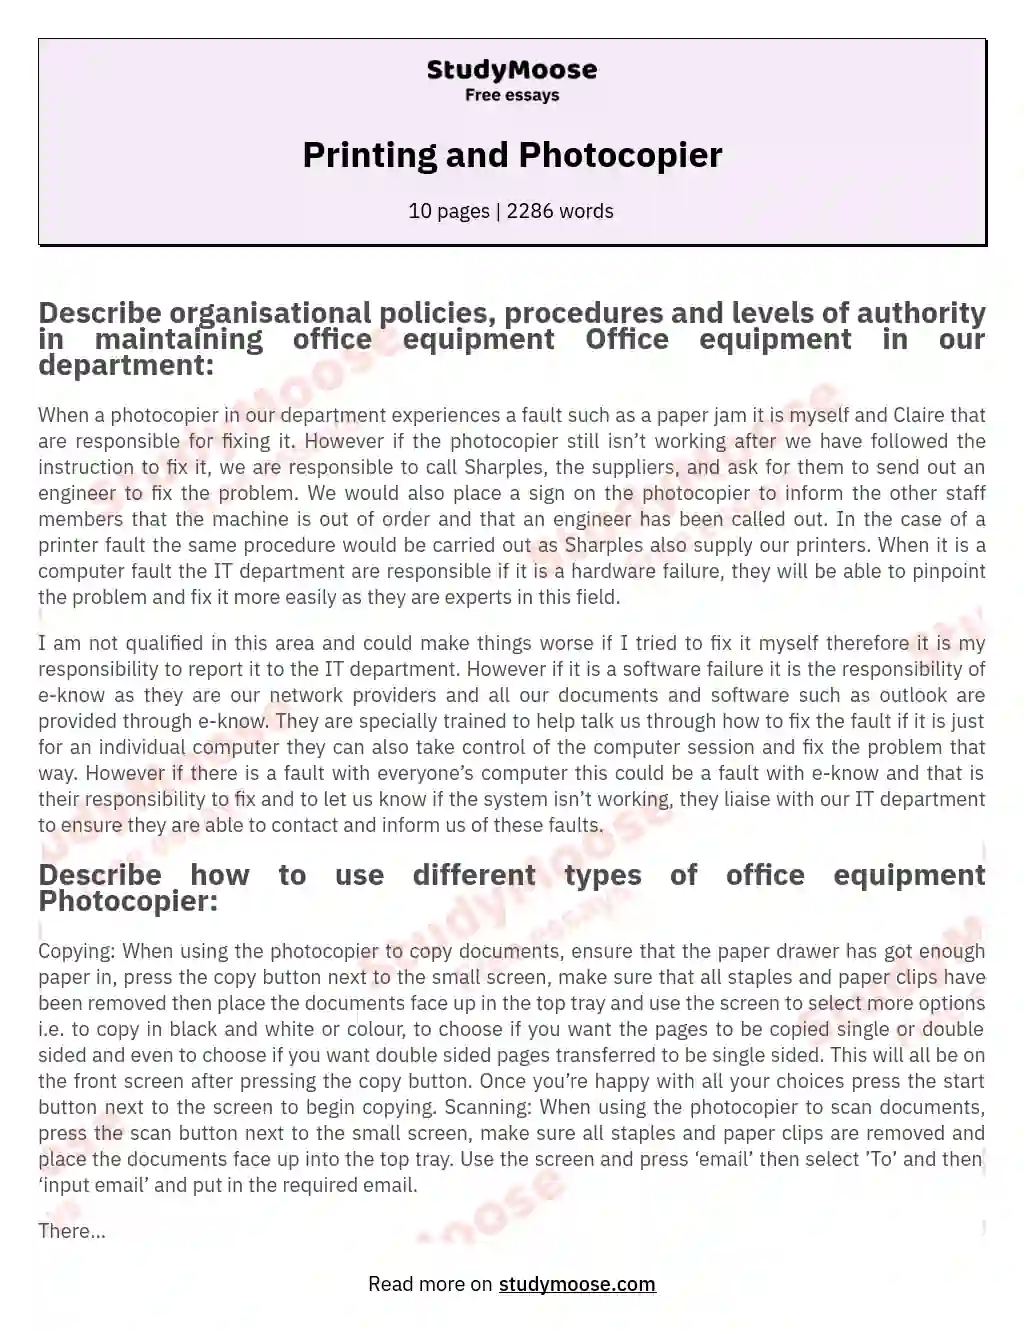 Printing and Photocopier essay